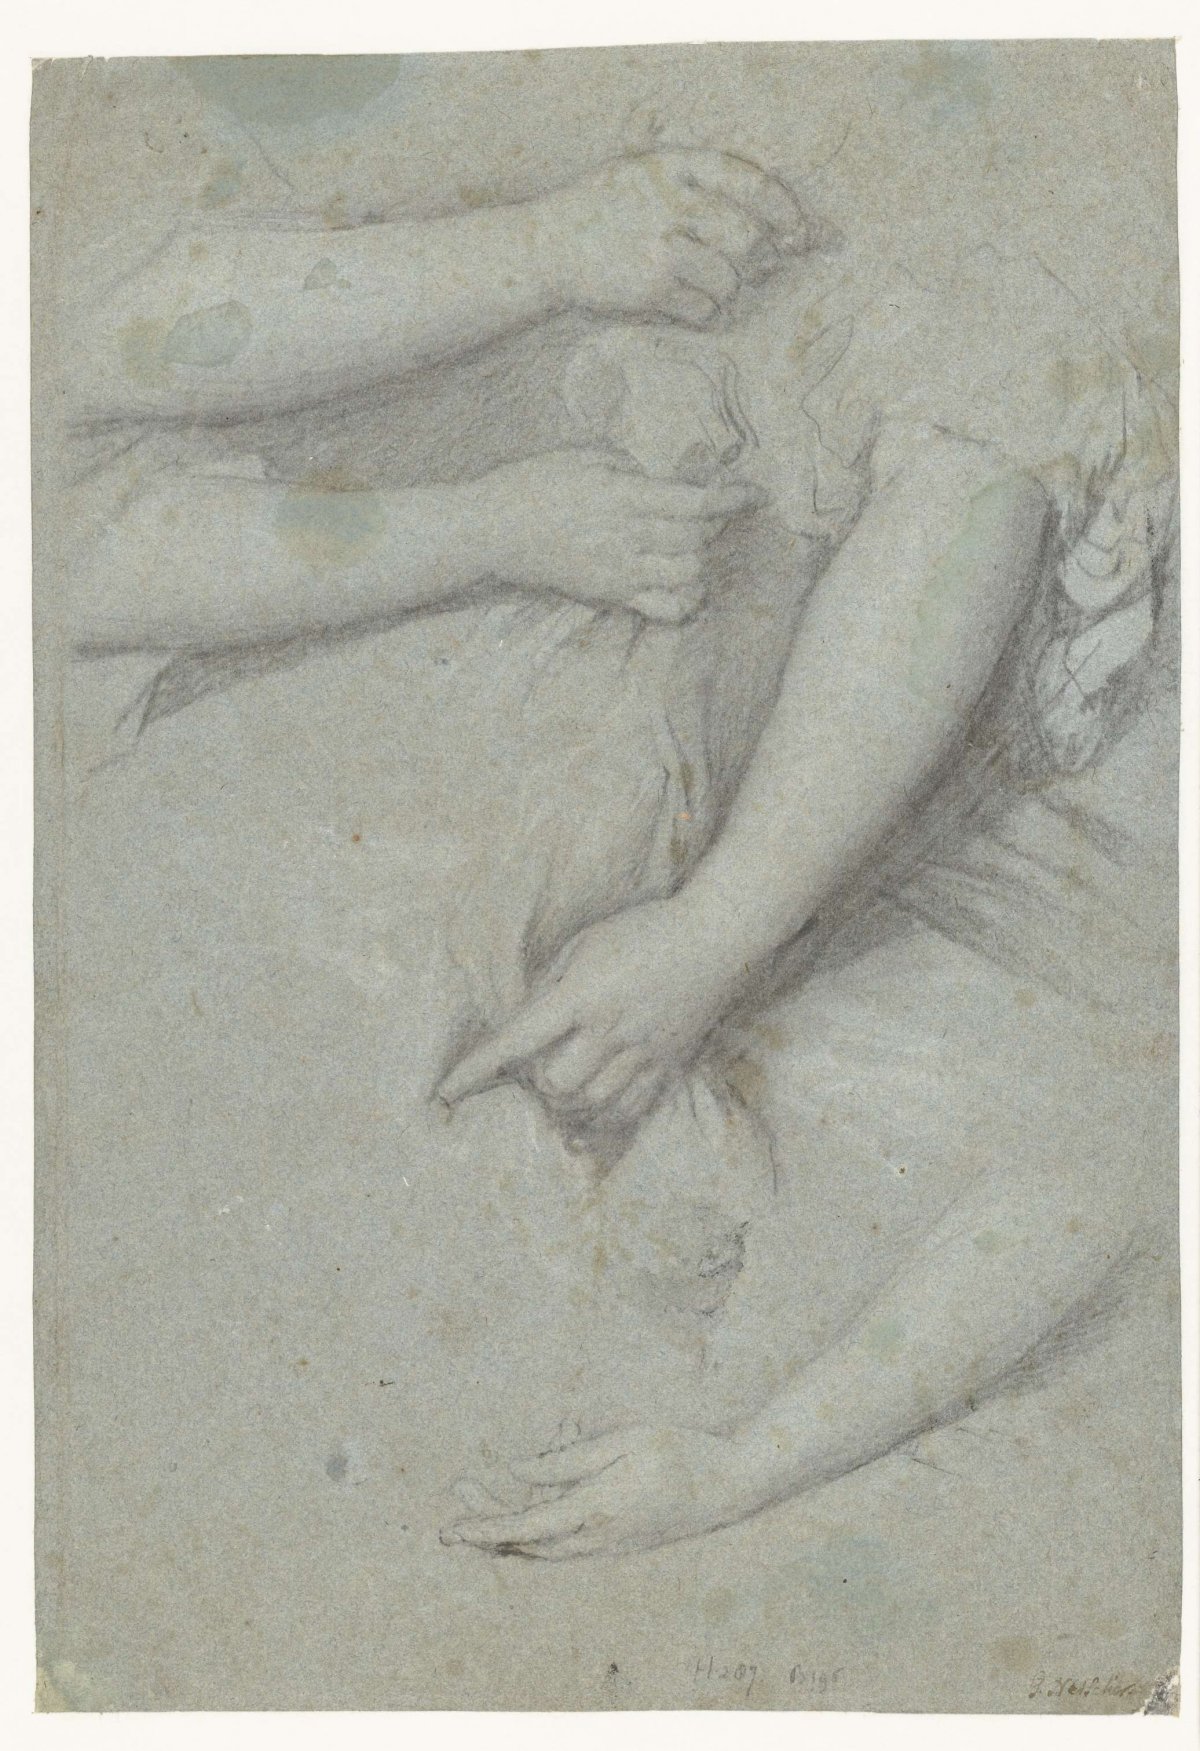 Four studies of a woman's arm, with drapery, Caspar Netscher, 1649 - 1684